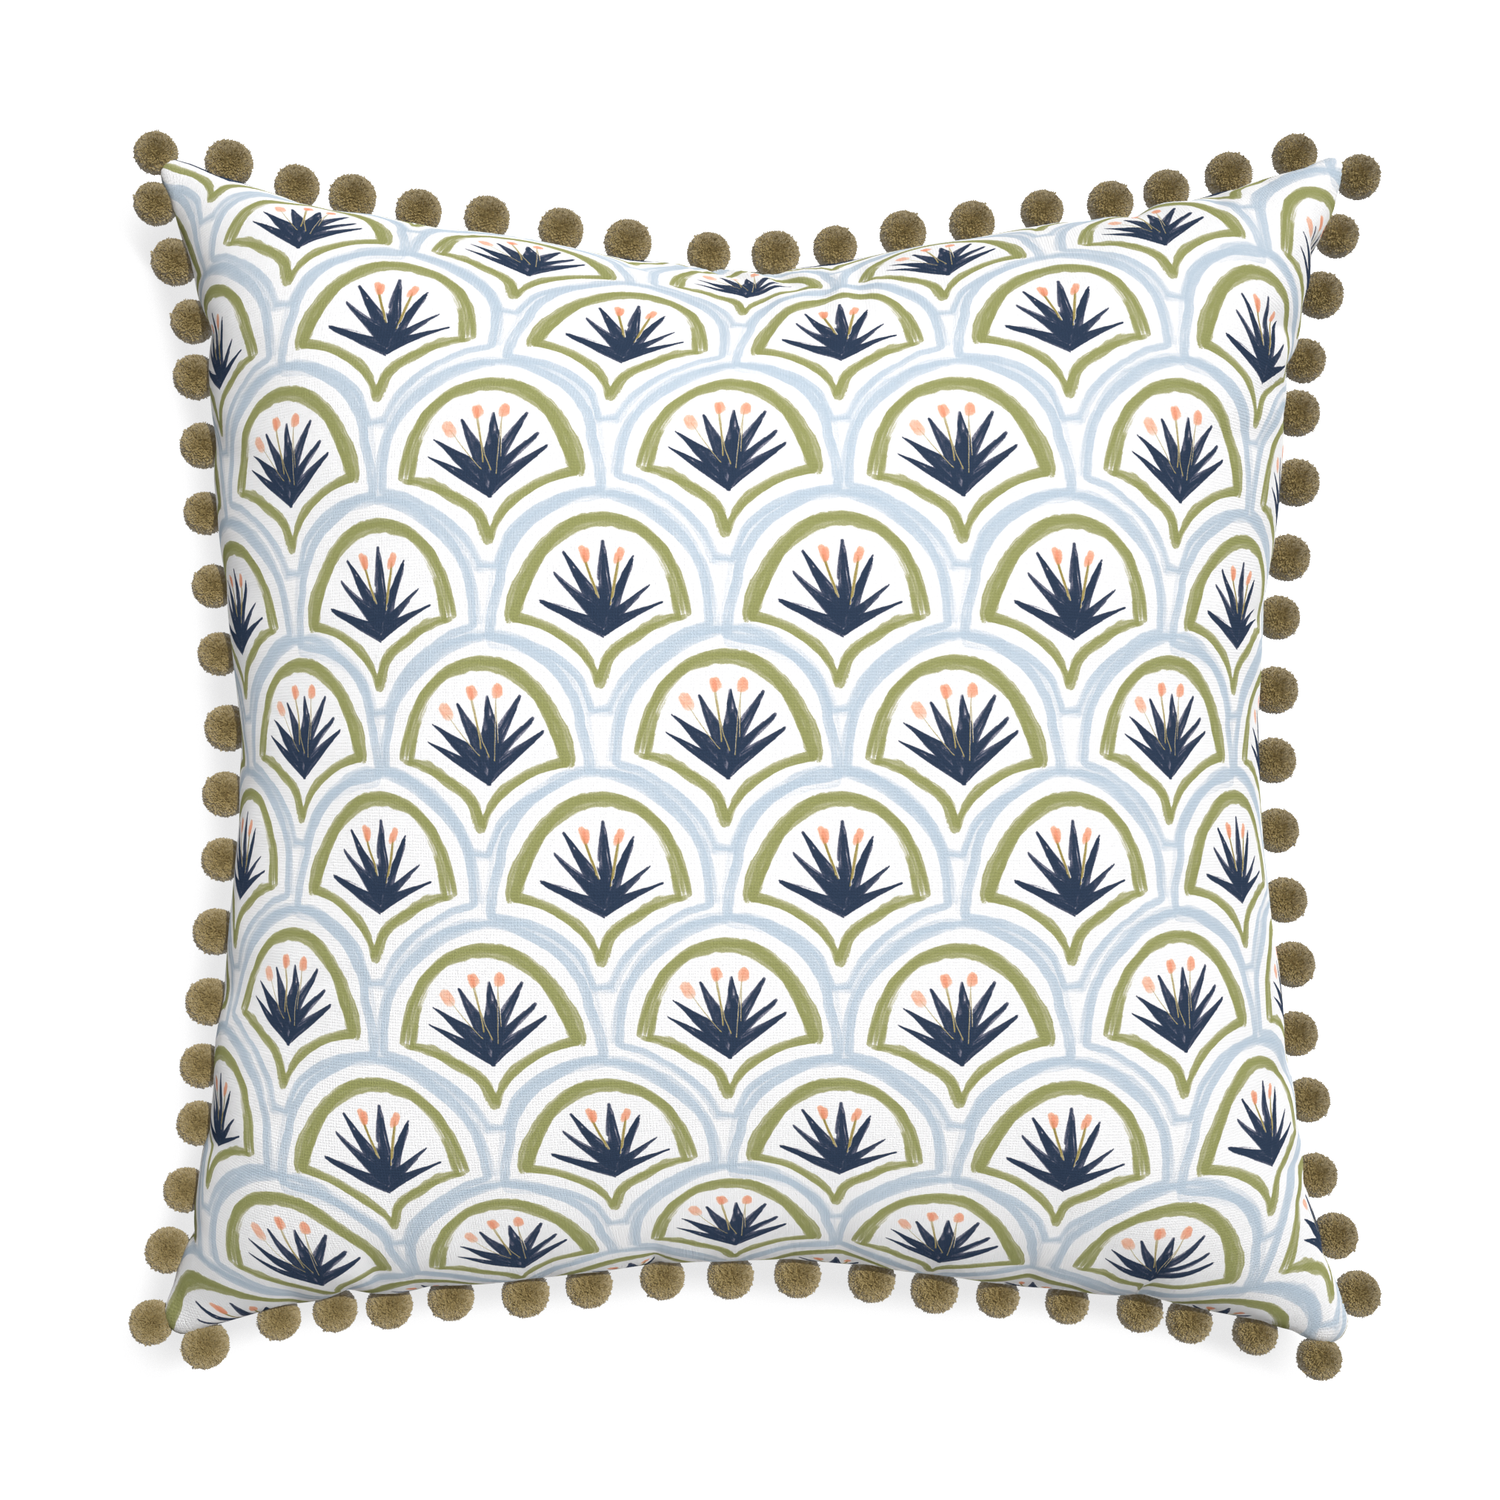 Euro-sham thatcher midnight custom art deco palm patternpillow with olive pom pom on white background